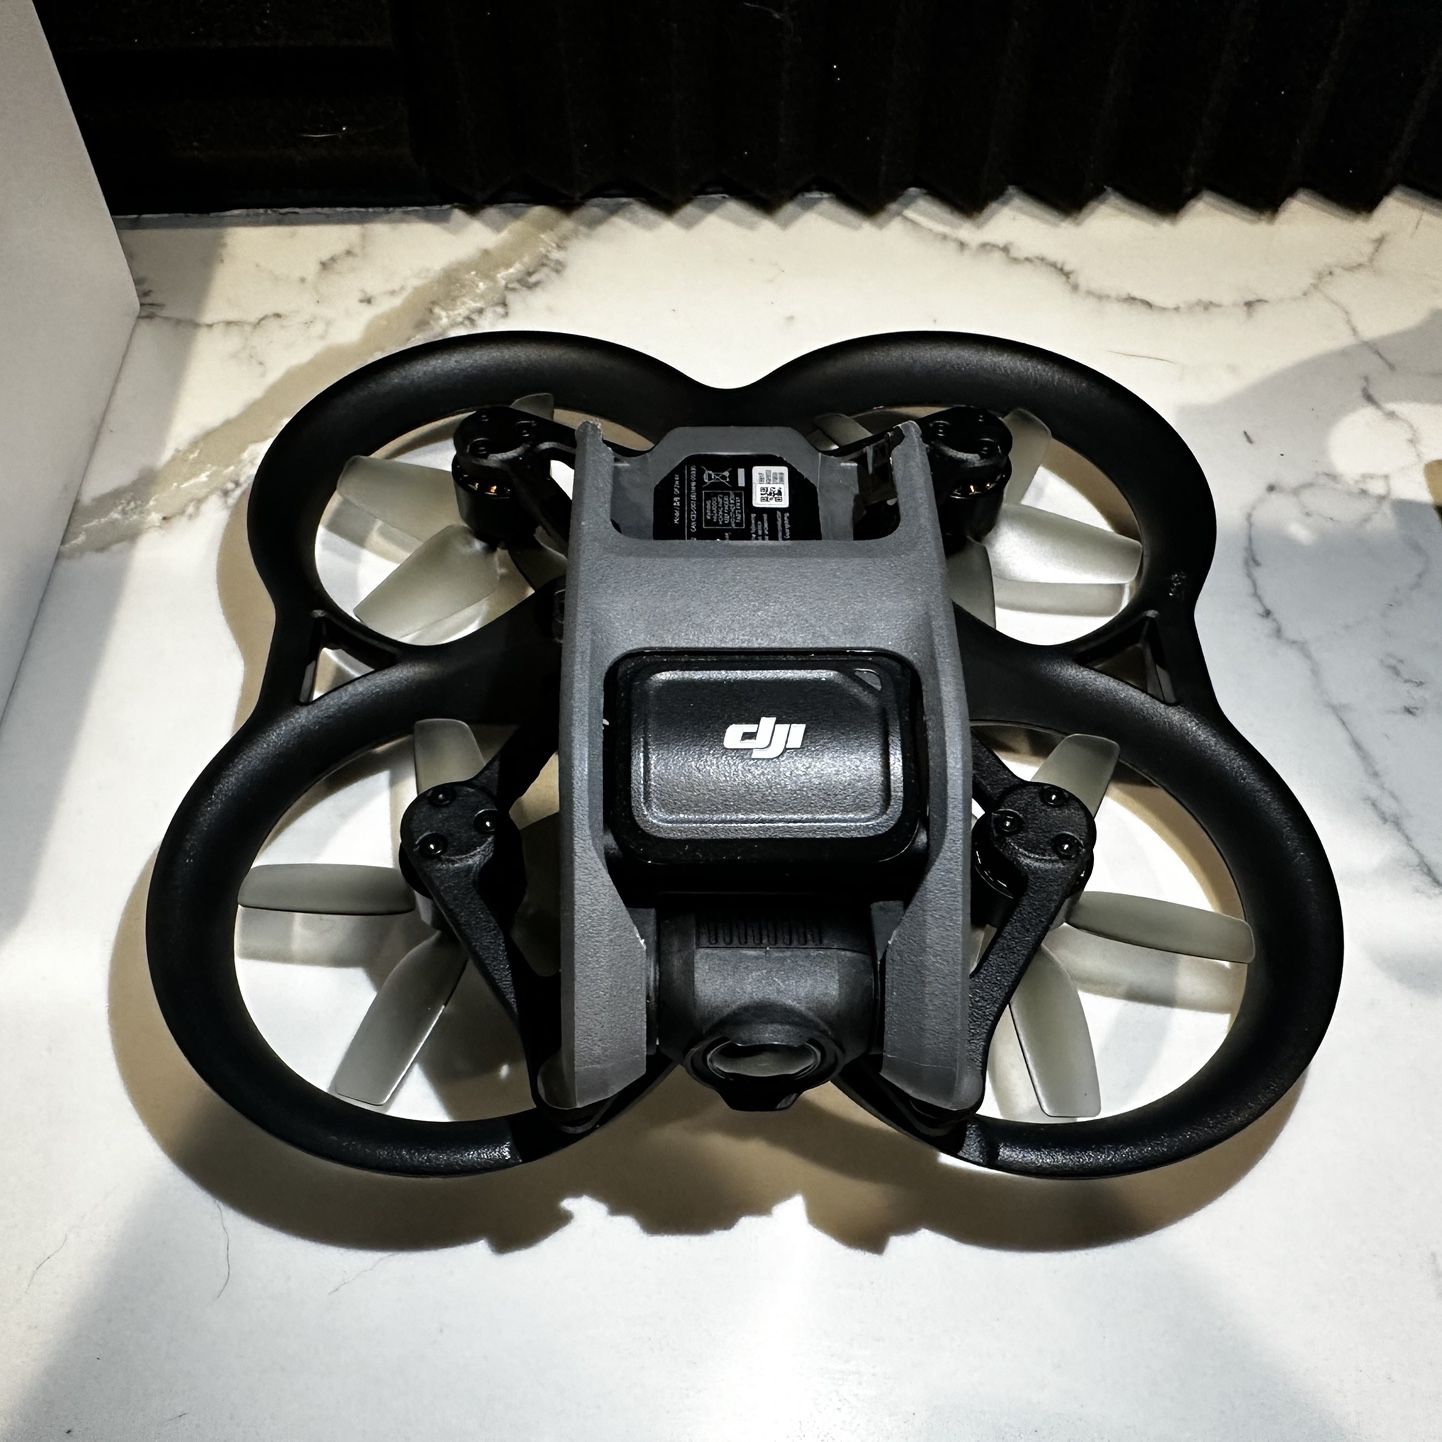 DJI Avata FPV Drone (New, Never Flown)